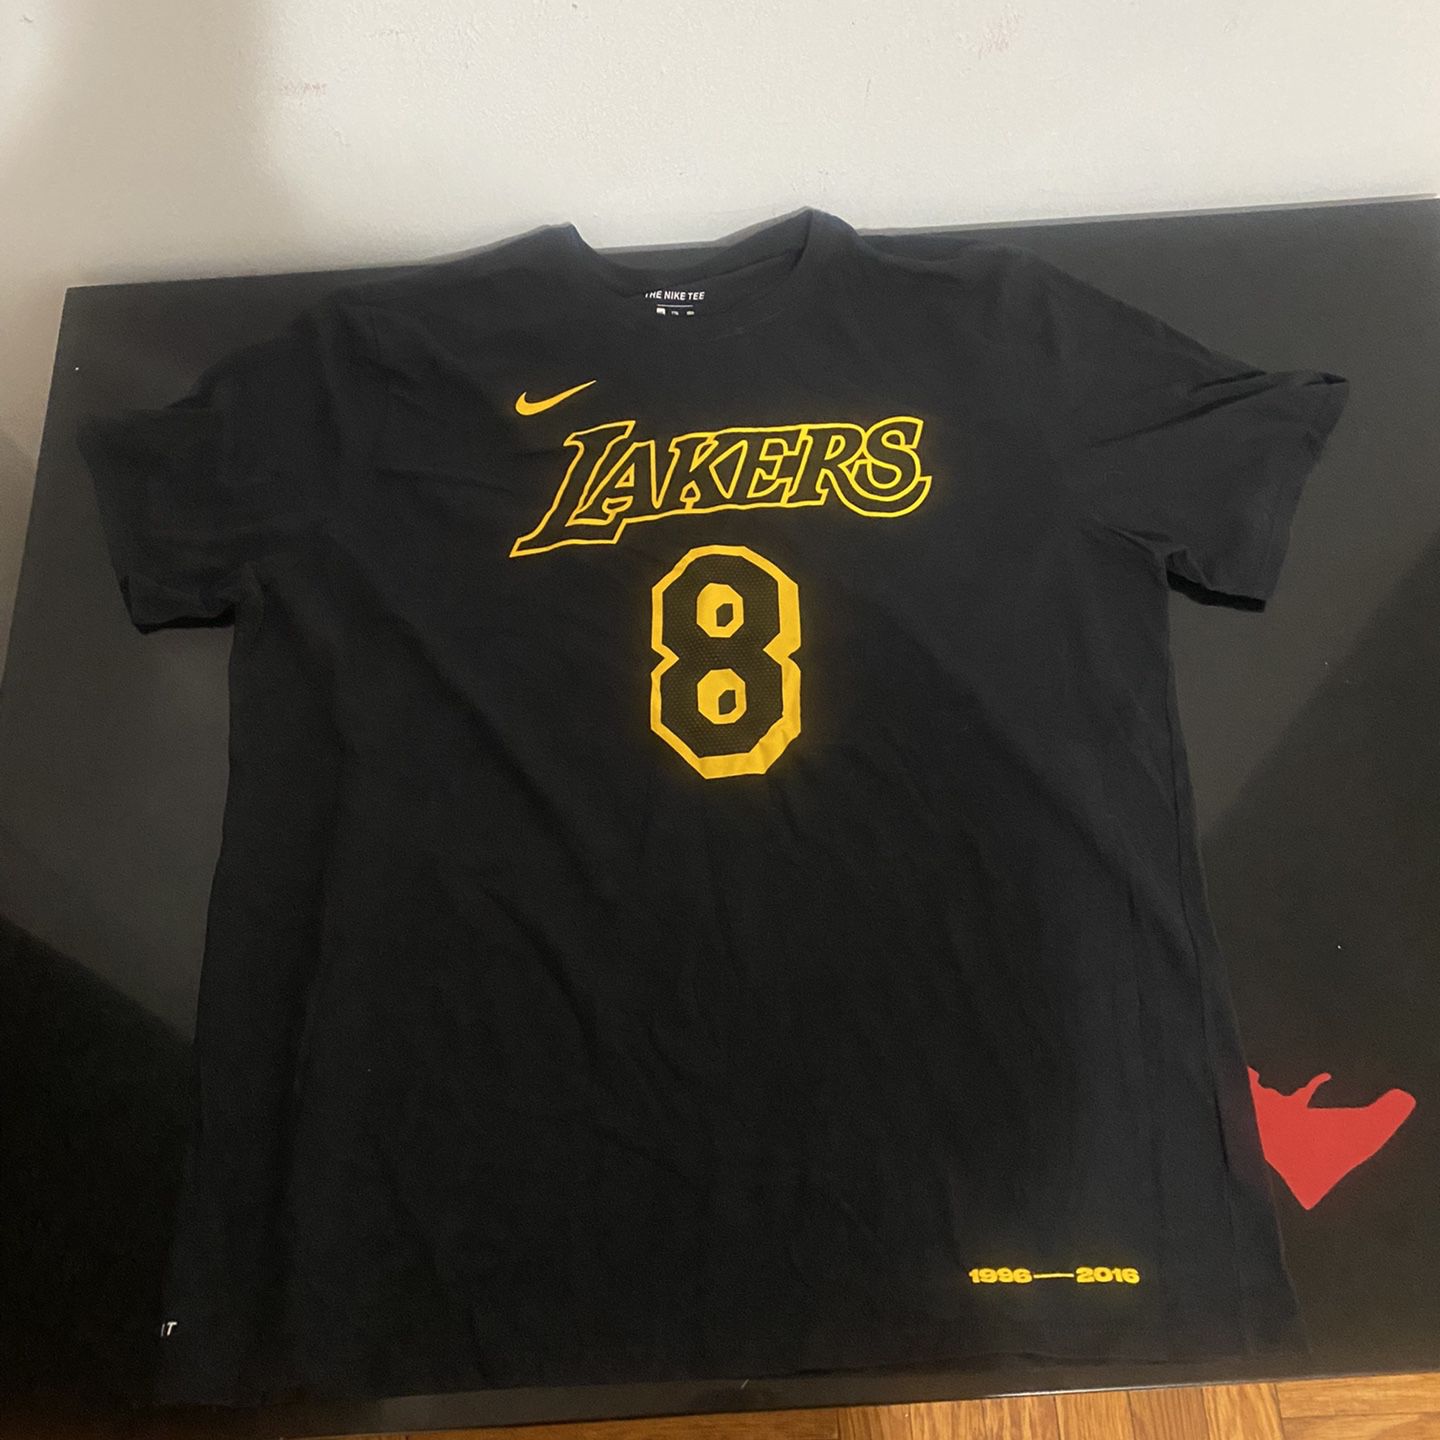 Nike Kobe Bryant 8/24 Retirement T-shirt Size Medium Mens $10 for